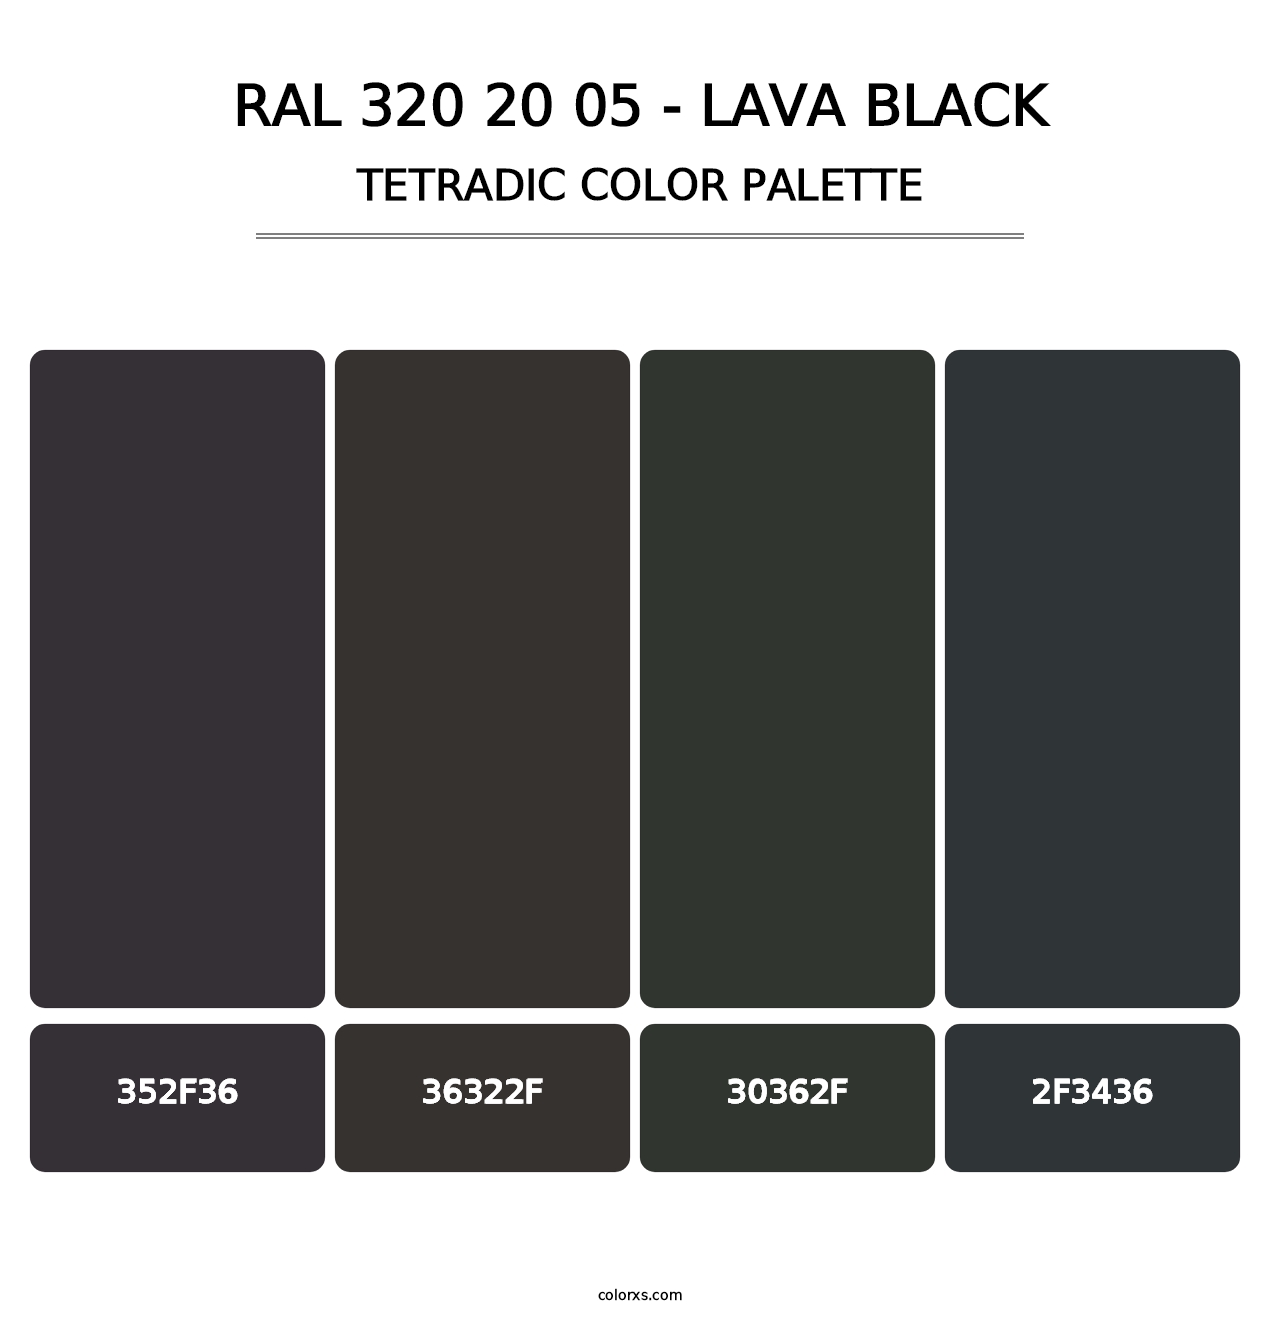 RAL 320 20 05 - Lava Black - Tetradic Color Palette